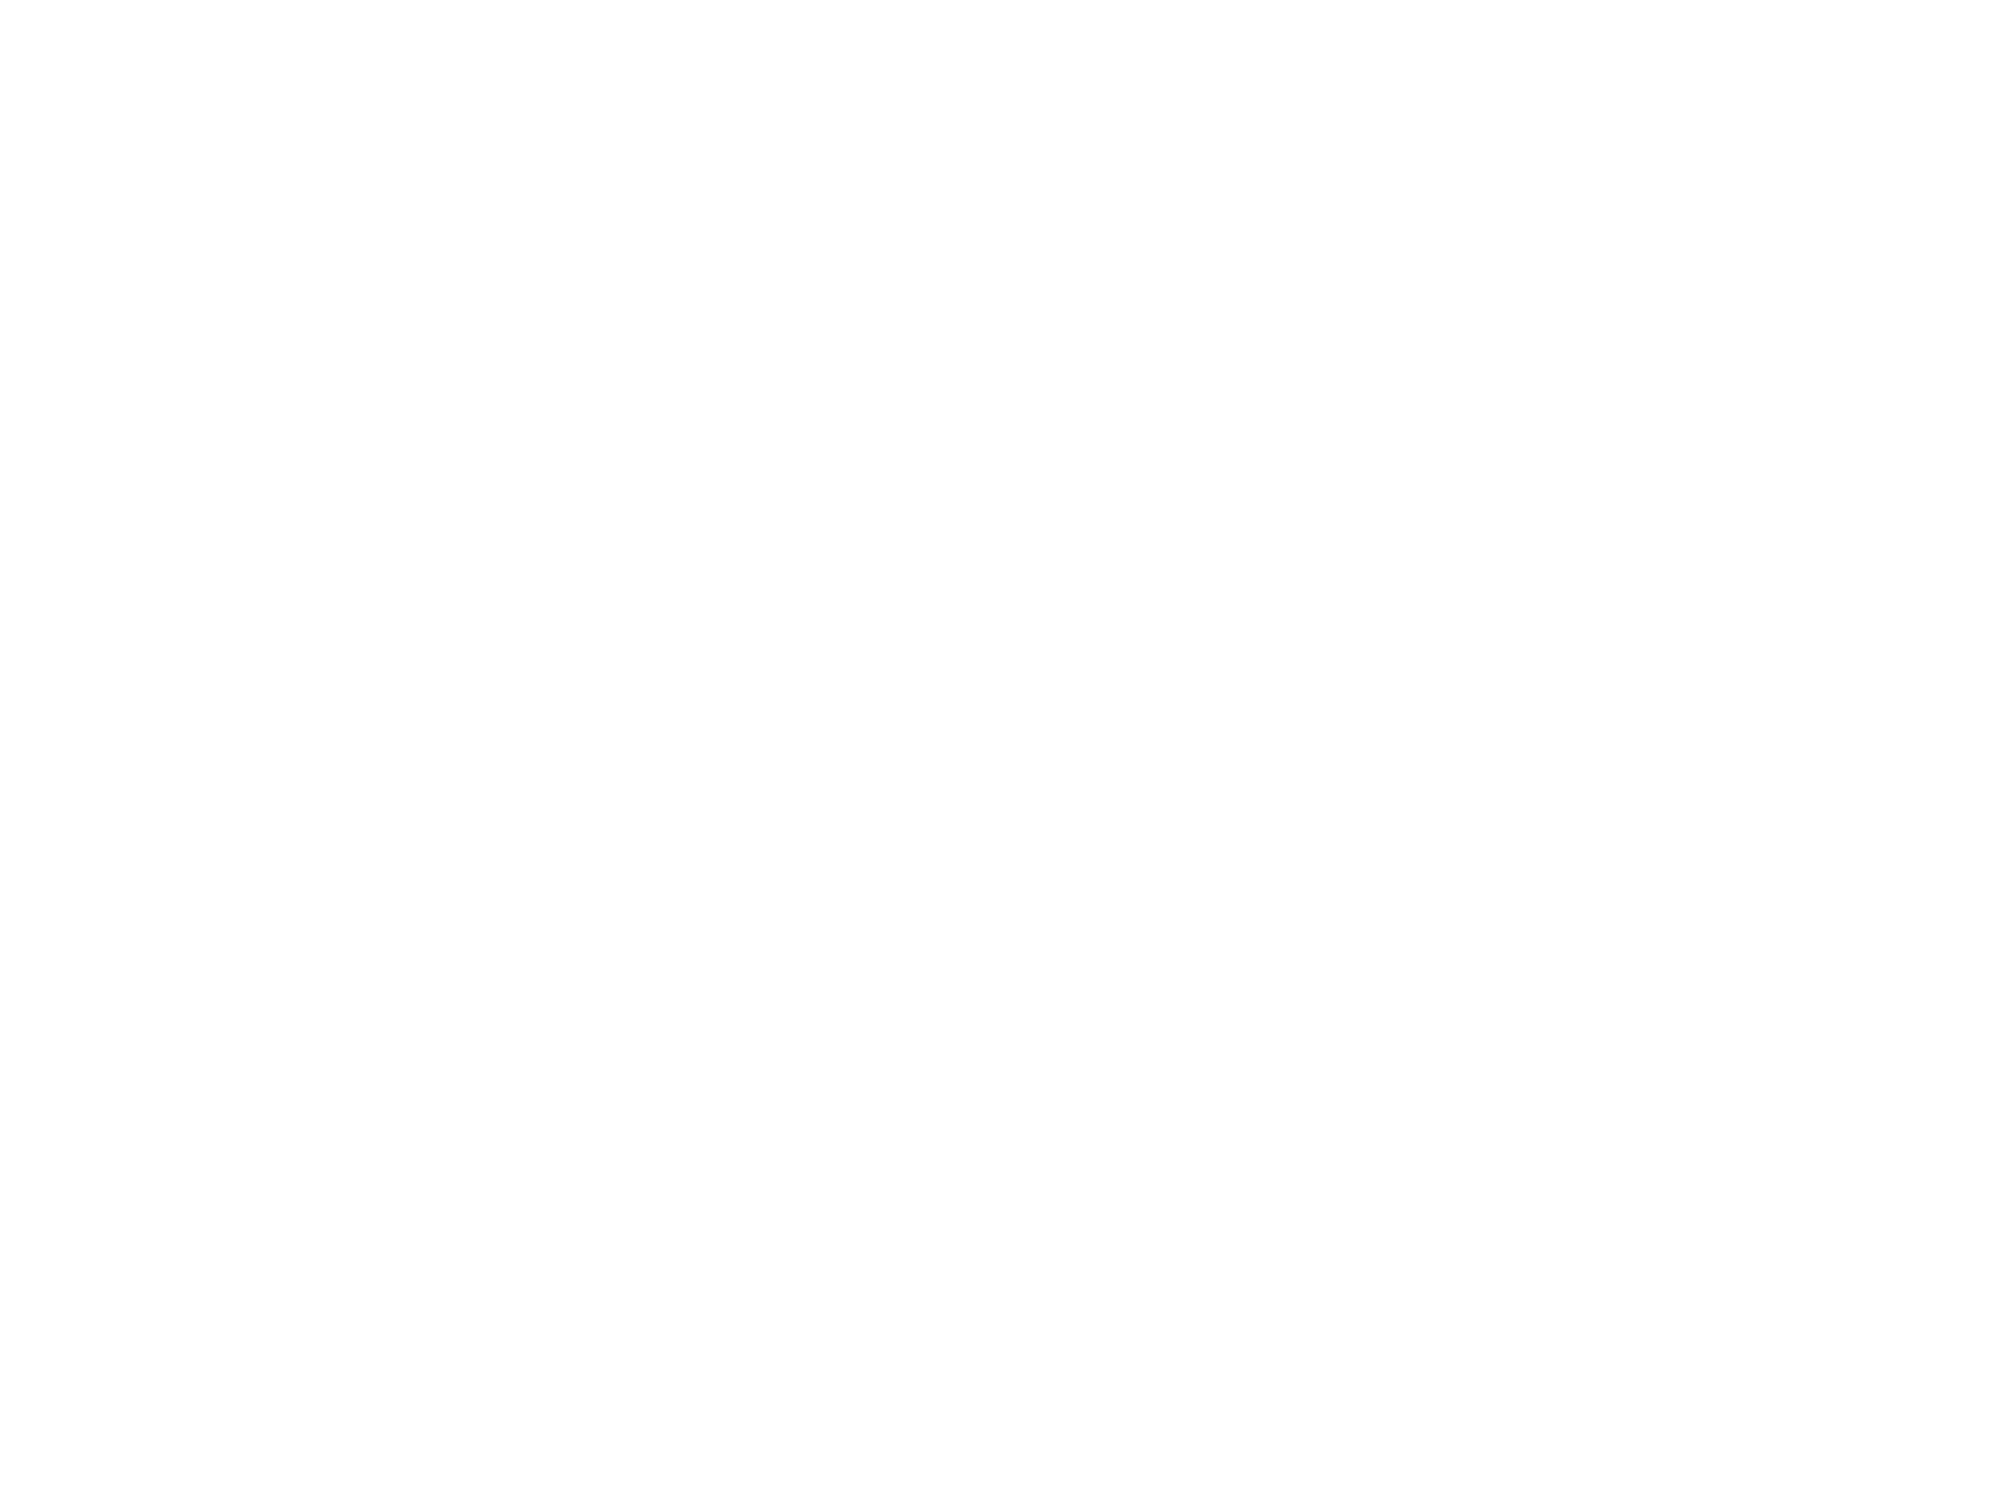 Lind-Bohanon logo set: white logo with only Lind-Bohanon name